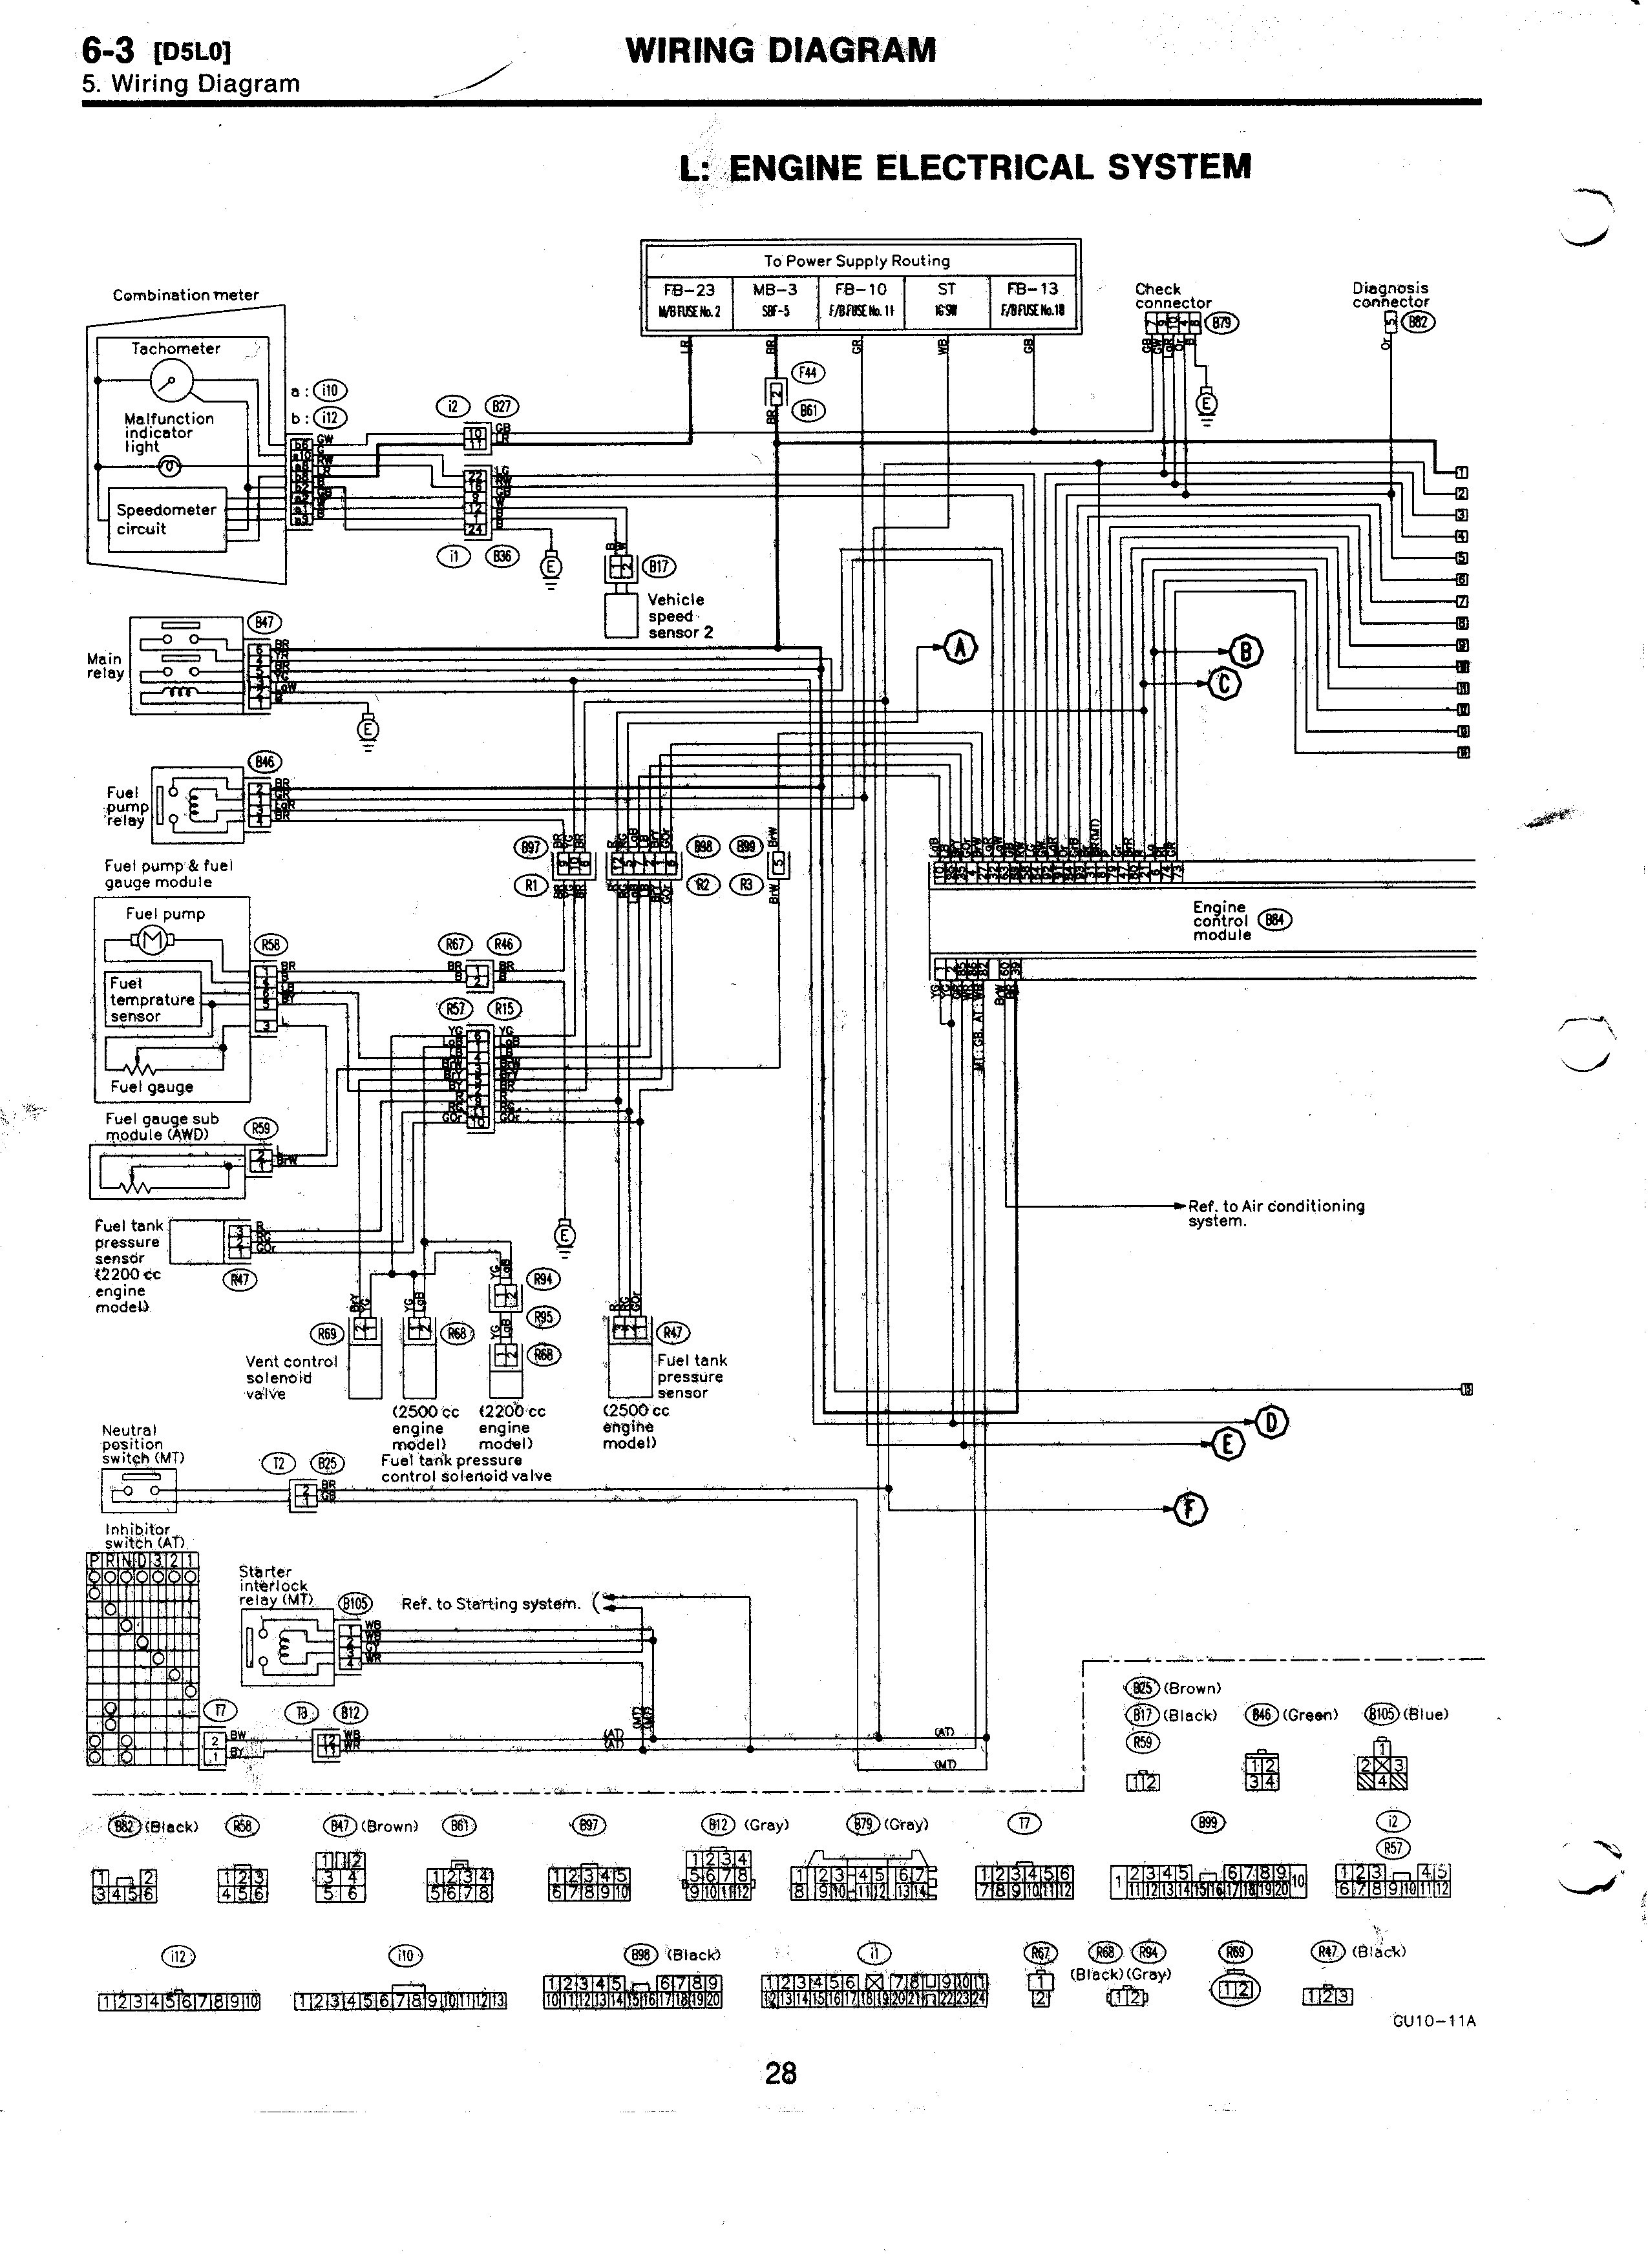 2007 Subaru forester Engine Diagram 2007 Subaru Wiring Diagrams Wiring Diagram New Of 2007 Subaru forester Engine Diagram